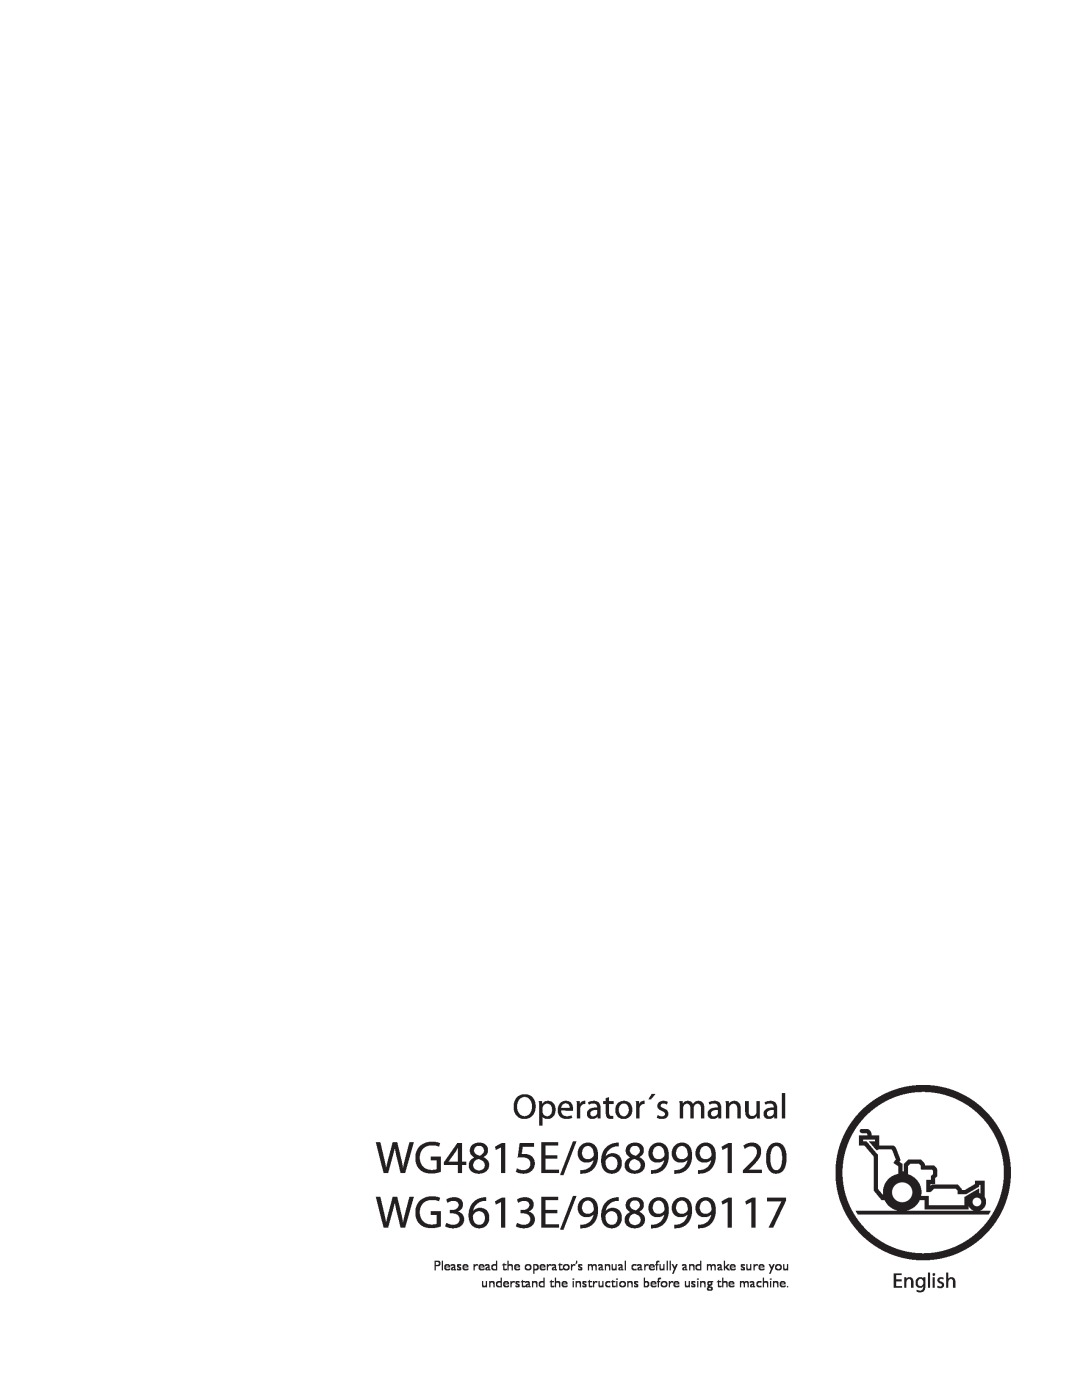 Husqvarna WG4815E, WG3613E manual English, WG4815E/968999120 WG3613E/968999117, Operator´s manual 